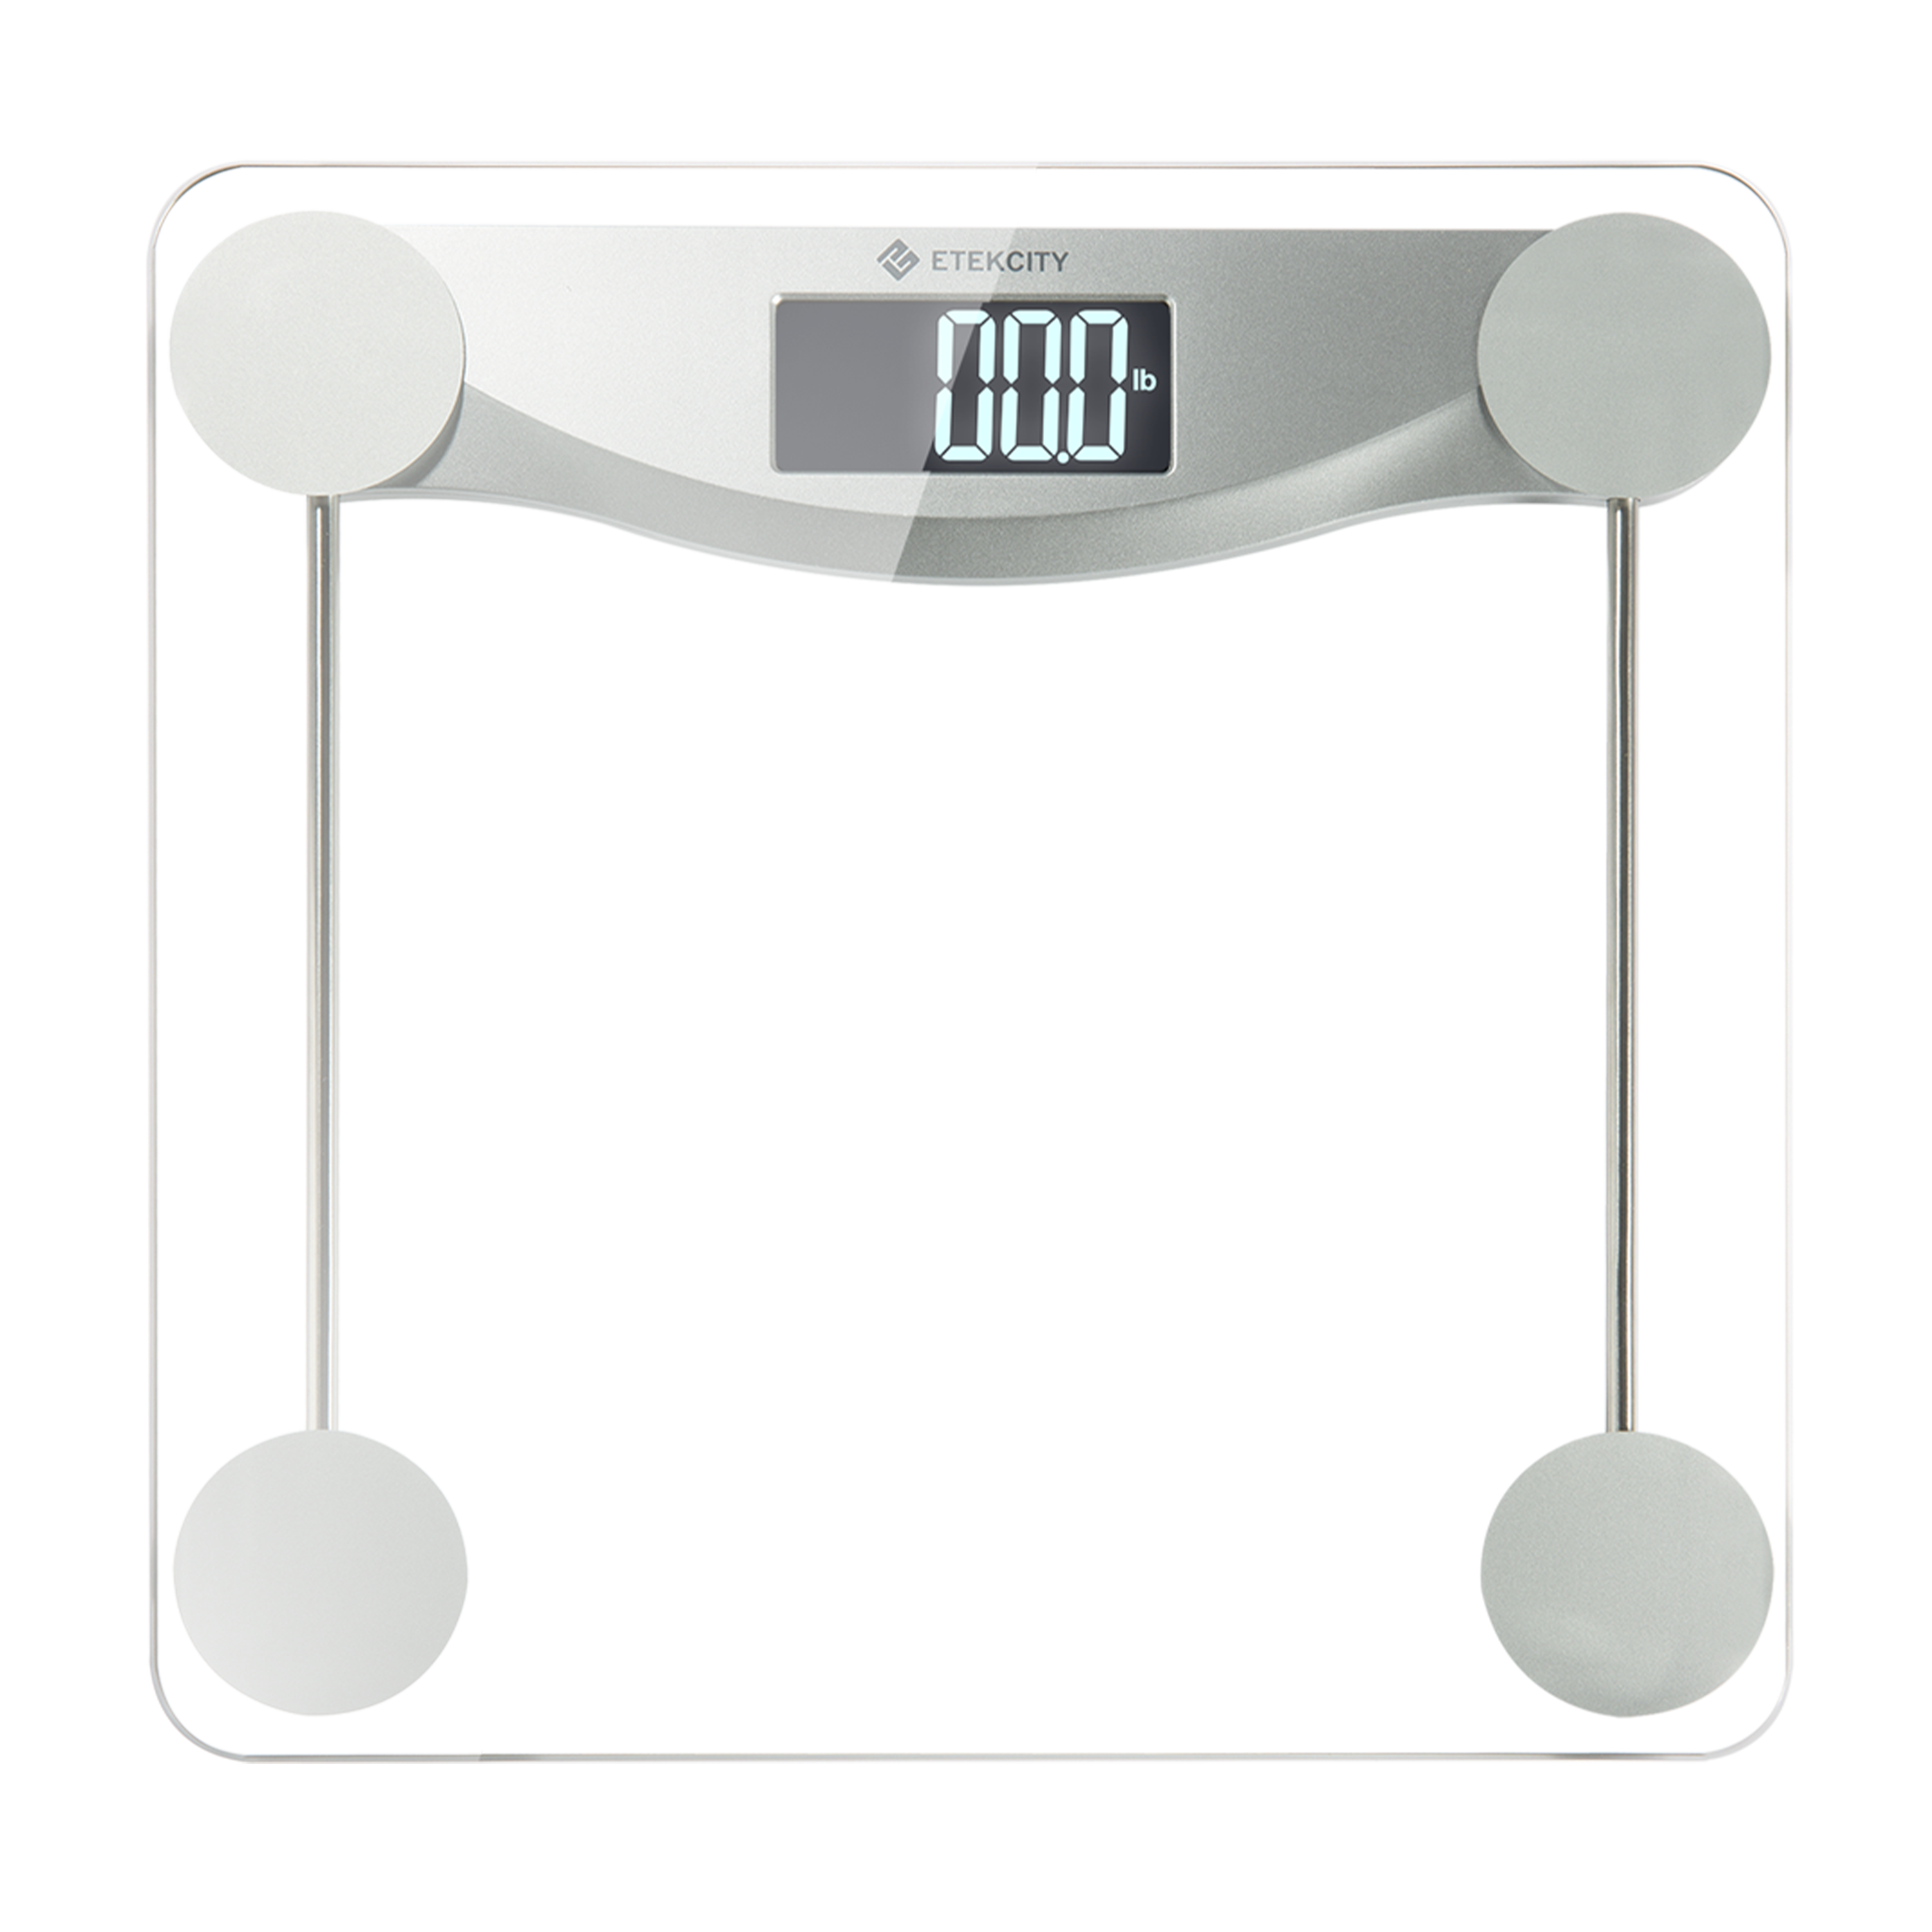 Etekcity EB4410B Digital Body Weight Scale